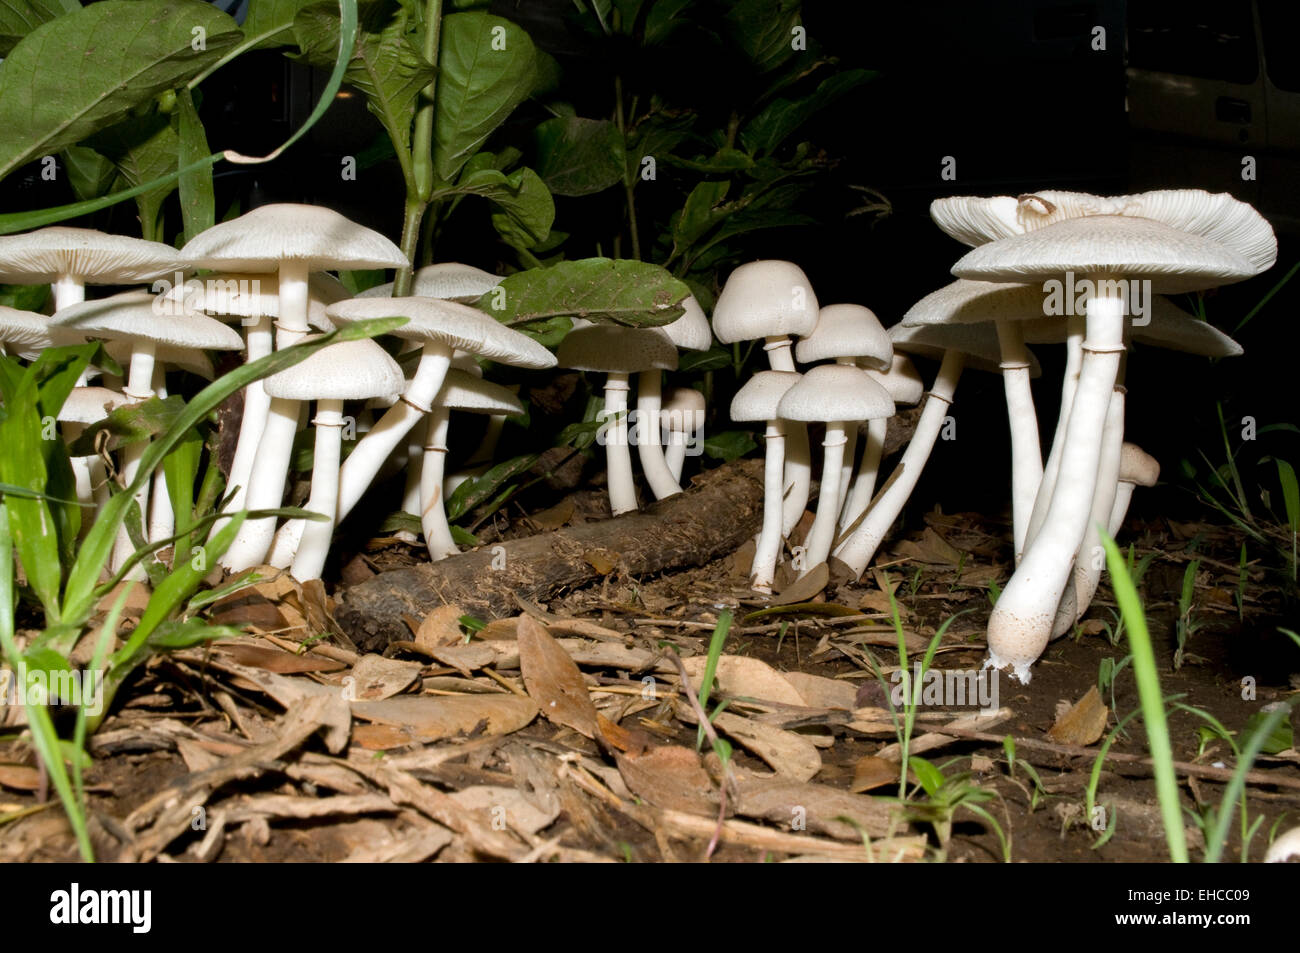 Mushrooms in the wild. Stock Photo